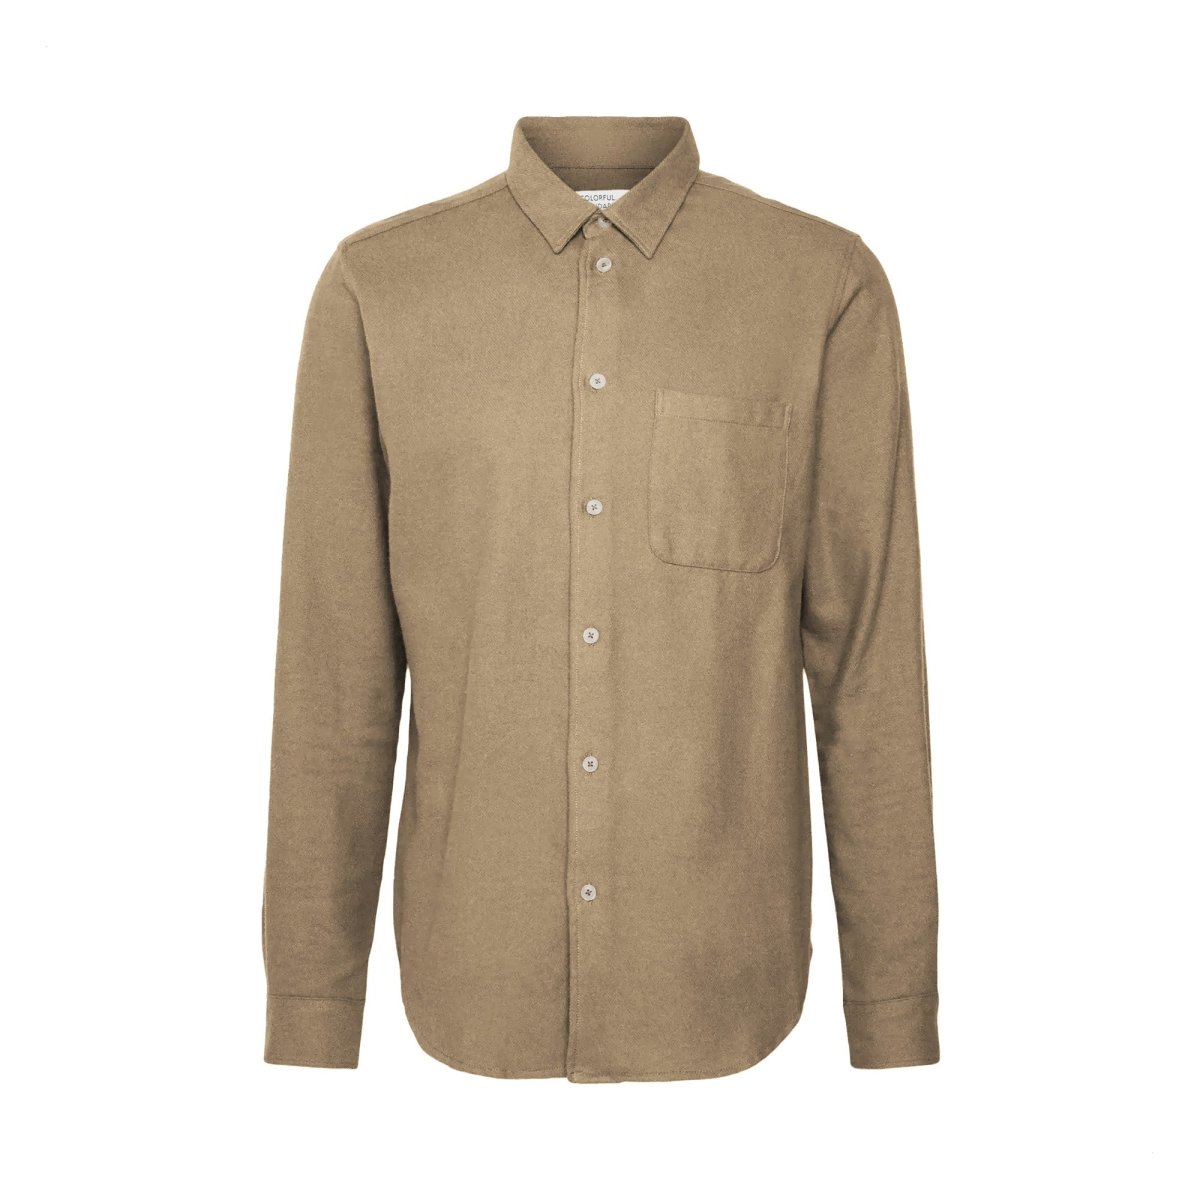 Colorful Flannel Shirt Desert Khaki - KYOTO - Colorful Standard